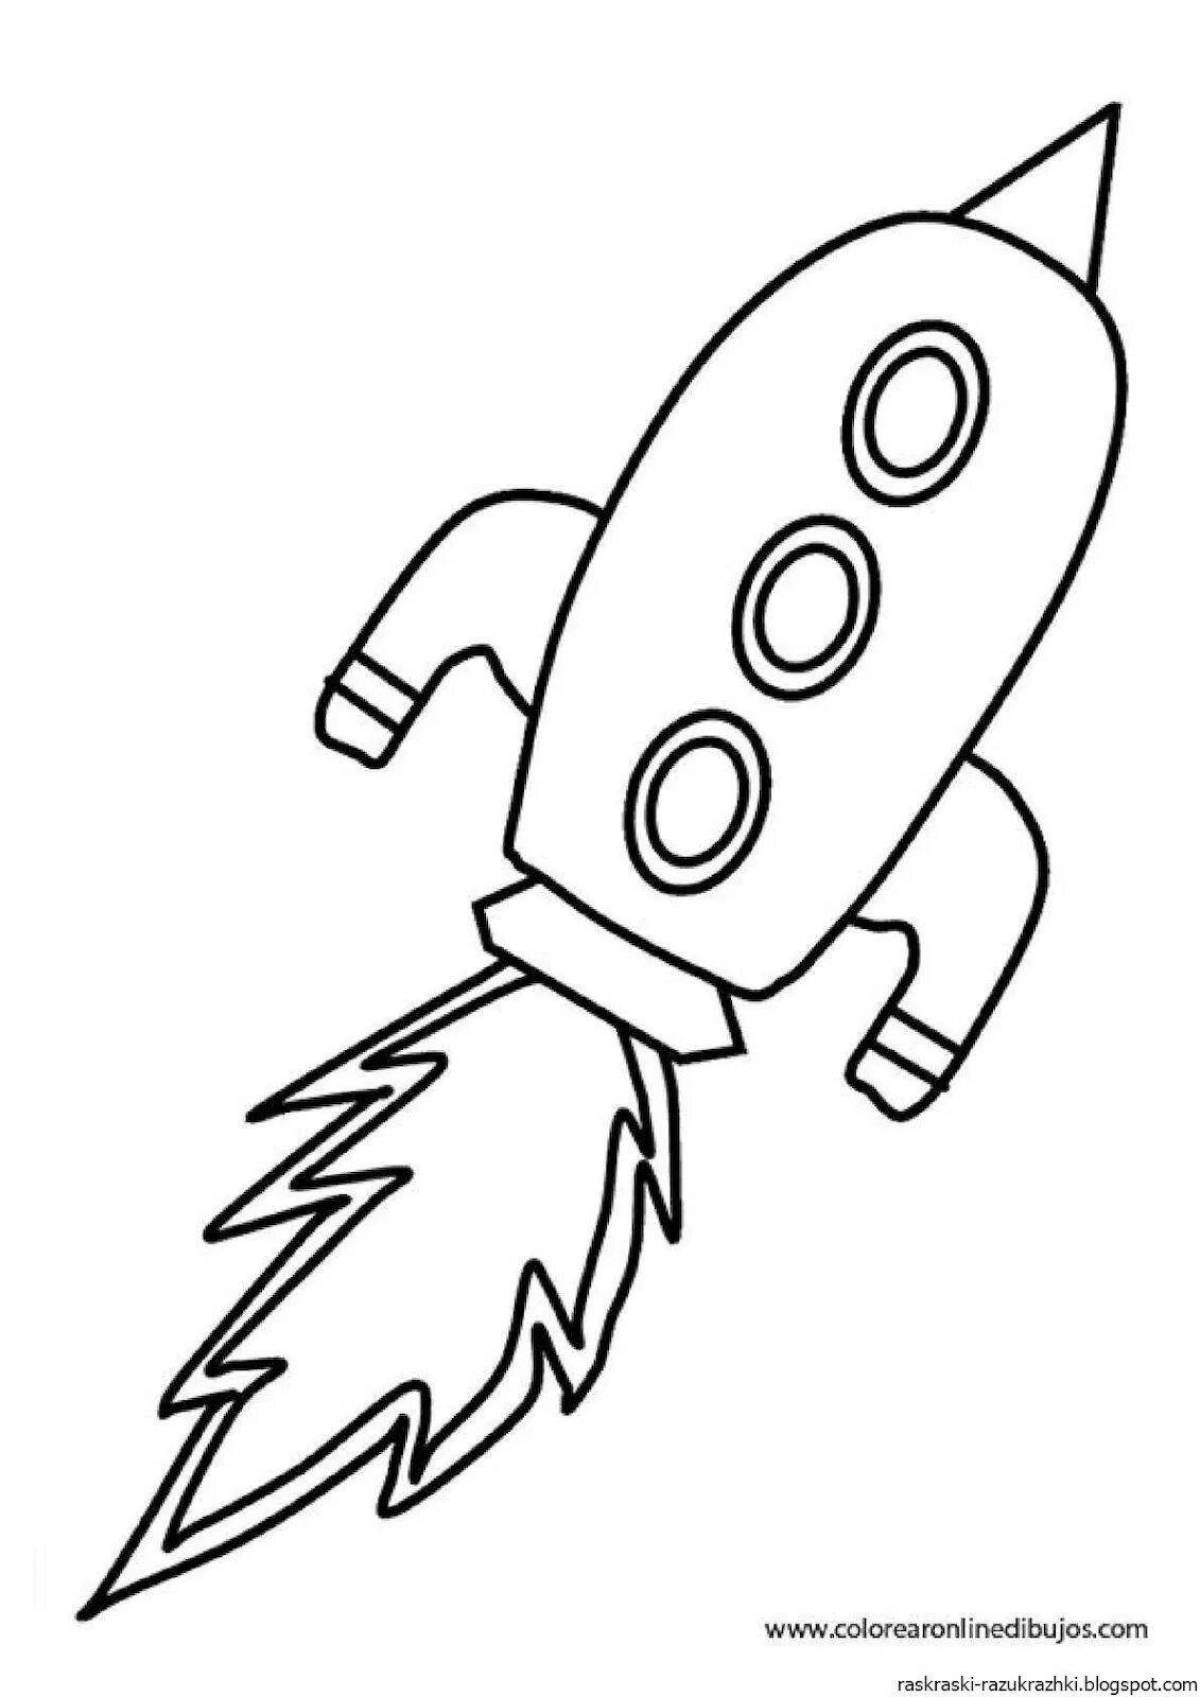 Innovative rocket coloring for kids